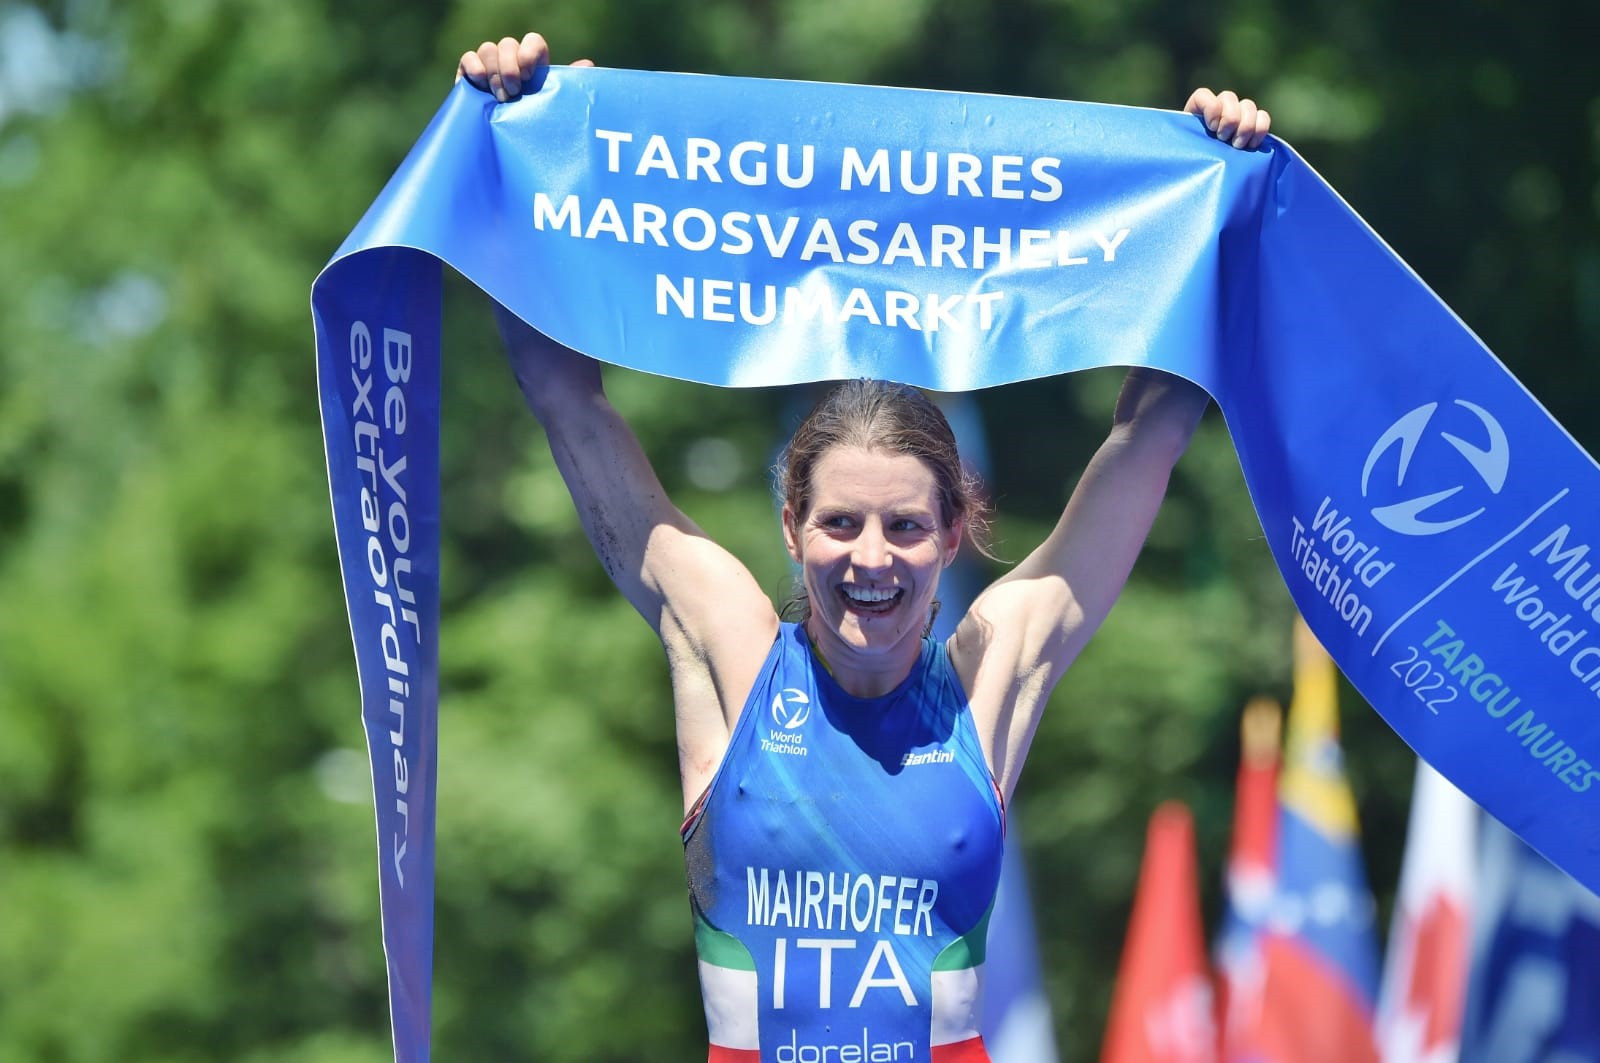 Sandra Mairhofer claimed victory in the women's race ©World Triathlon